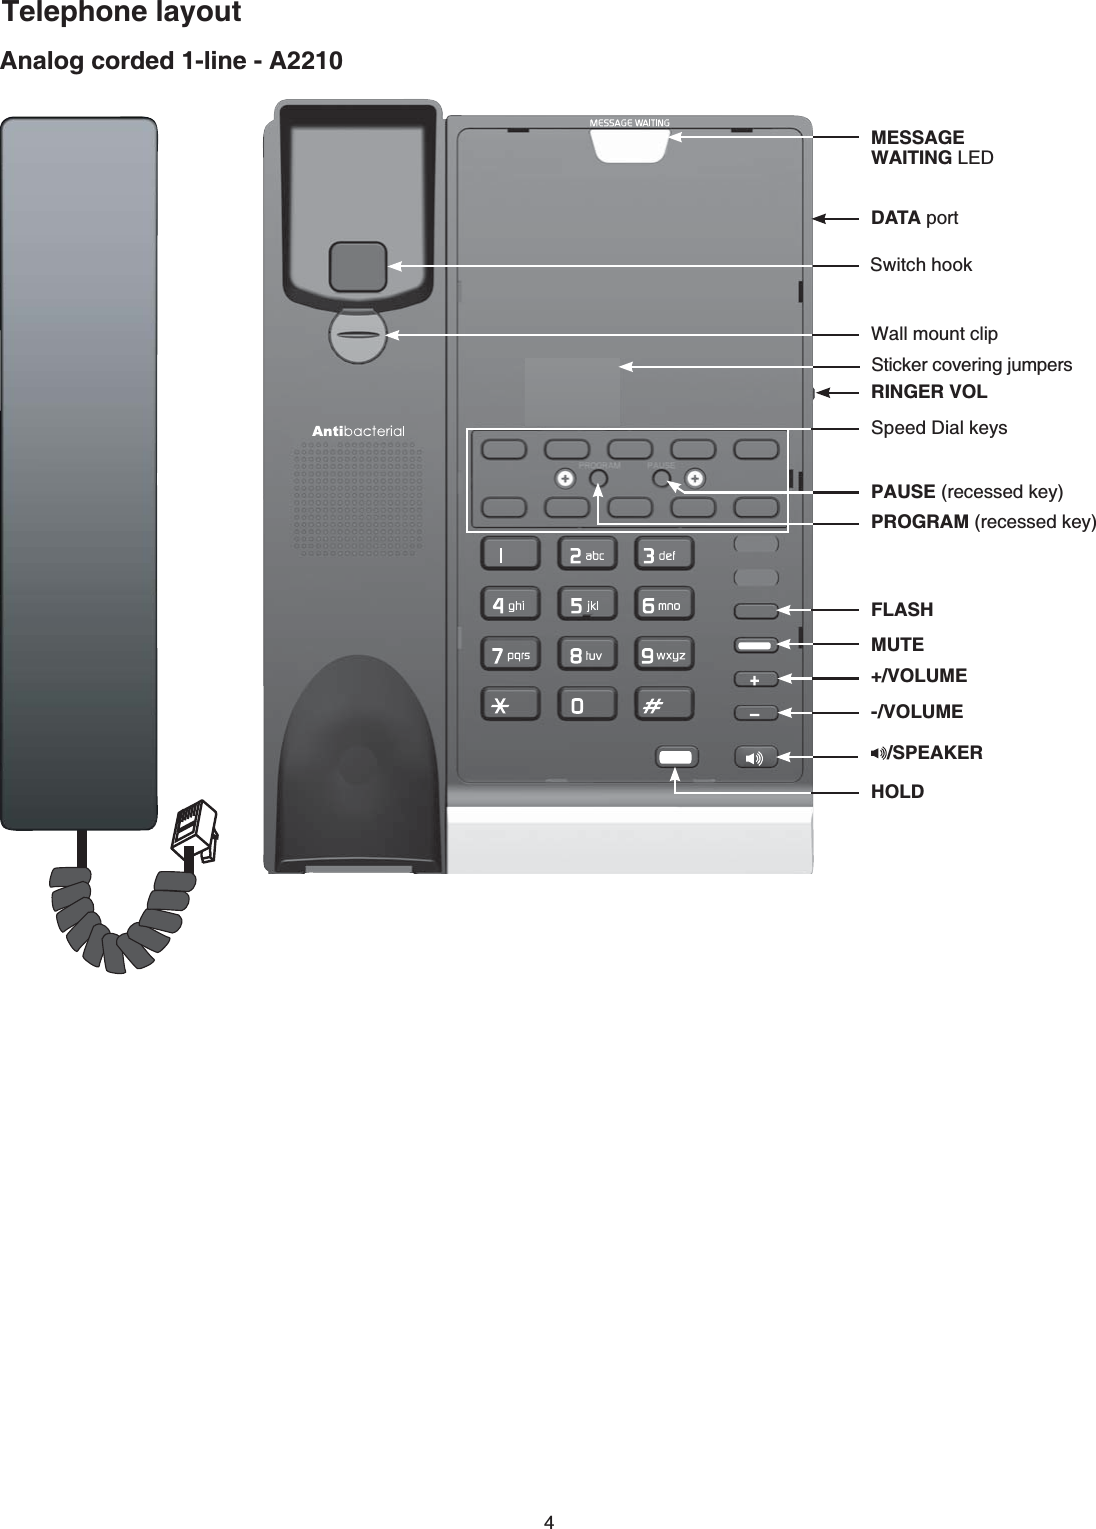 4Telephone layoutAnalog corded 1-line - A2210-/VOLUMEMUTEFLASHSpeed Dial keysDATA portMESSAGE WAITING LEDWall mount clipRINGER VOLHOLD/SPEAKERPROGRAM (recessed key)PAUSE (recessed key)+/VOLUMESwitch hookSticker covering jumpers